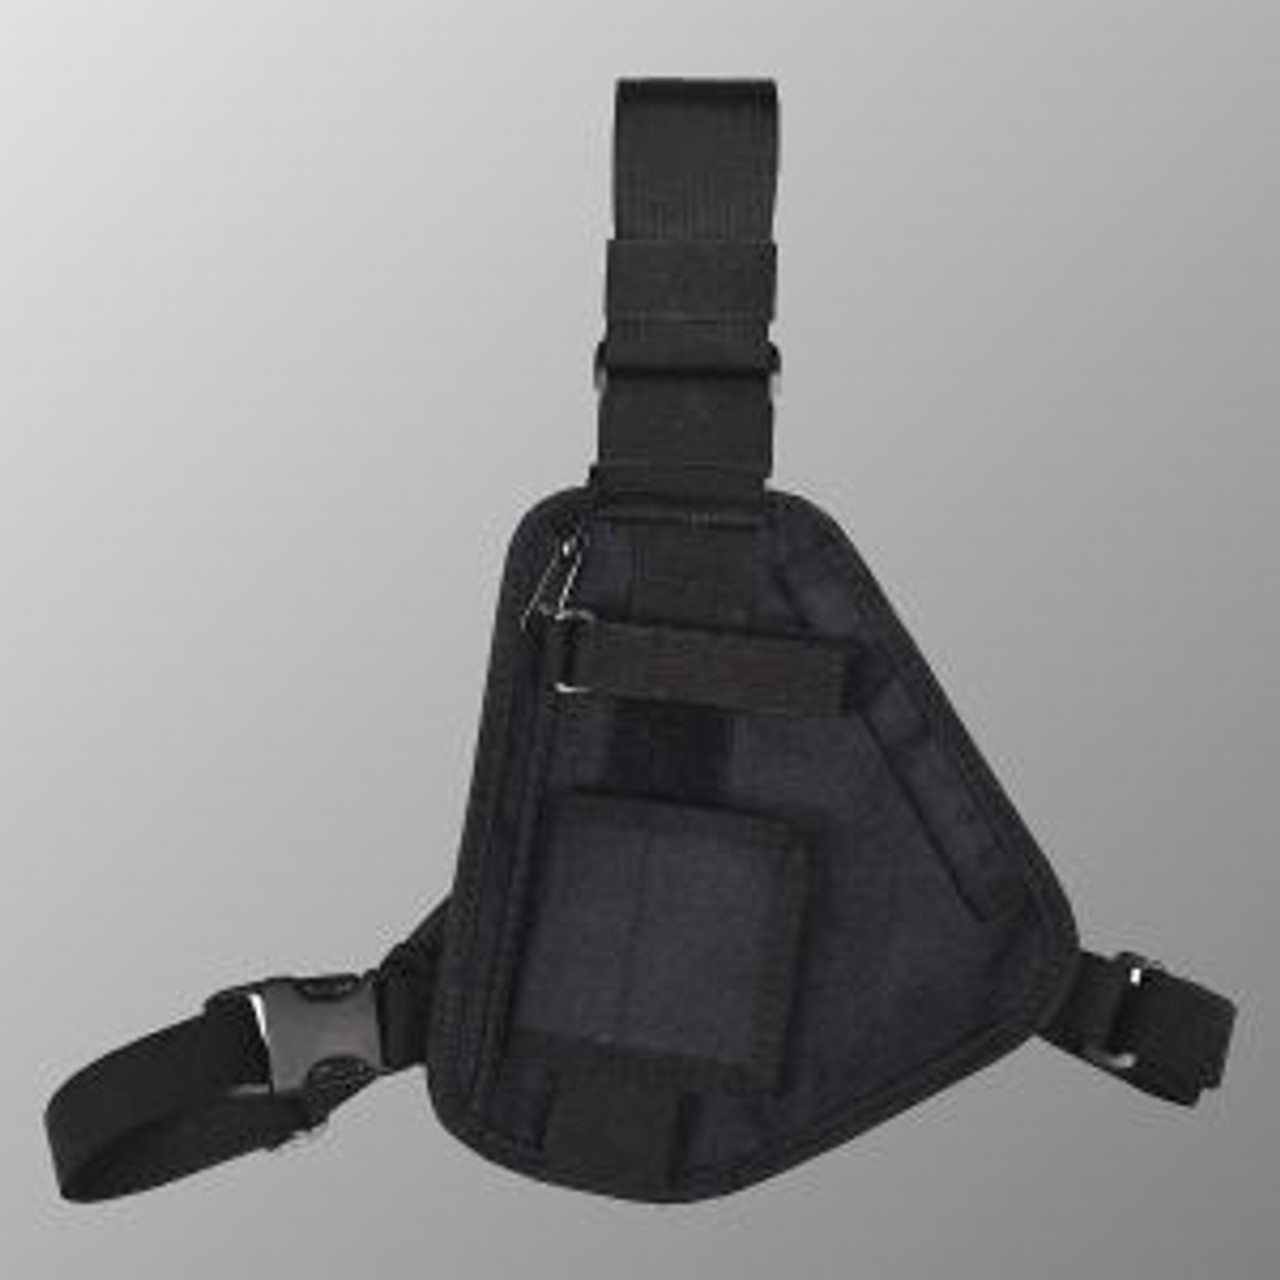 Maxon TS-2116 3-Point Chest Harness - Black